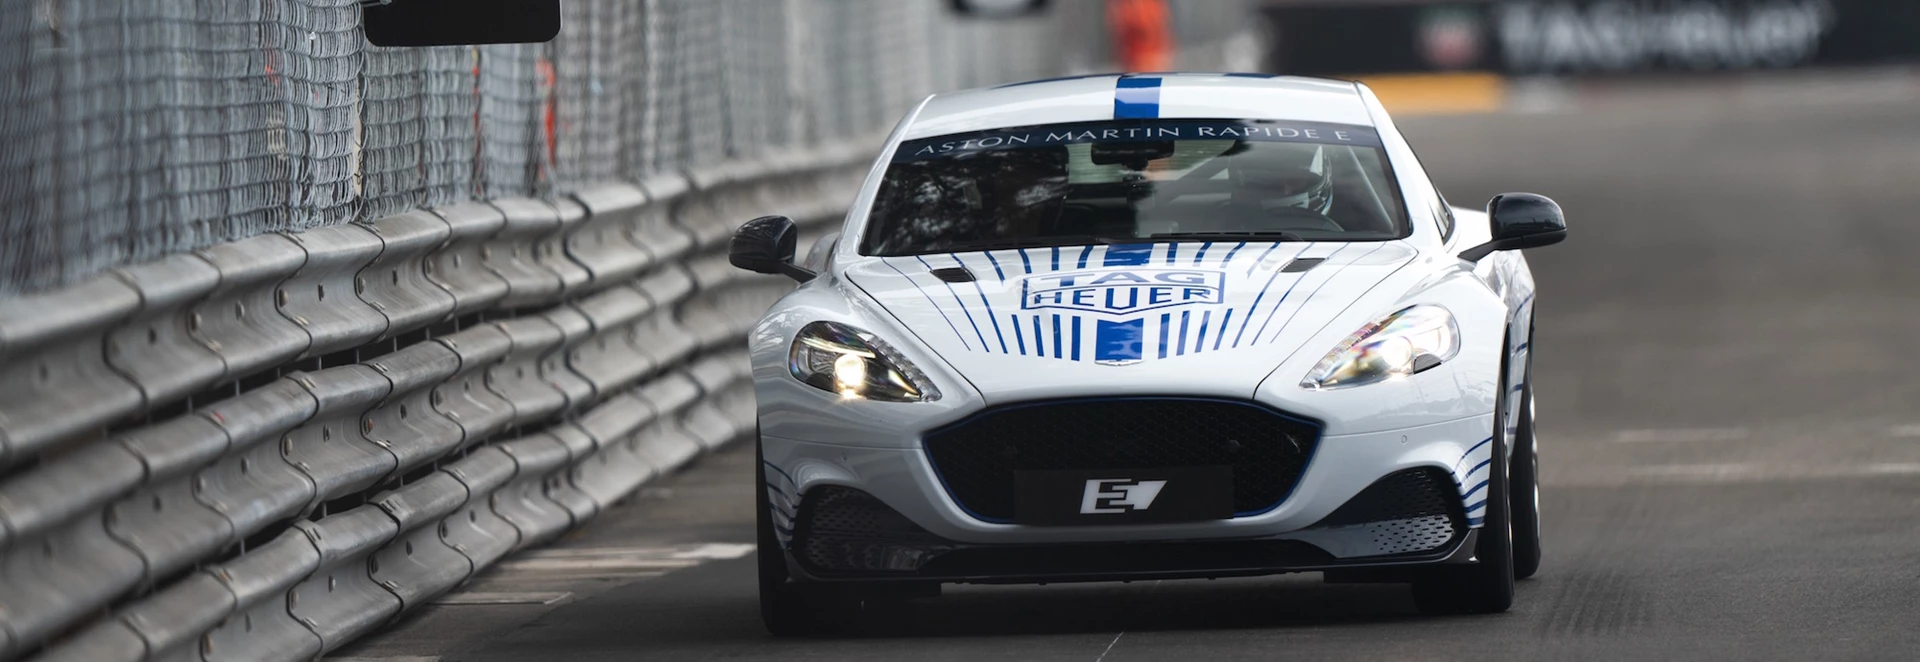 Aston Martin’s first EV makes dynamic debut at Monaco ePrix